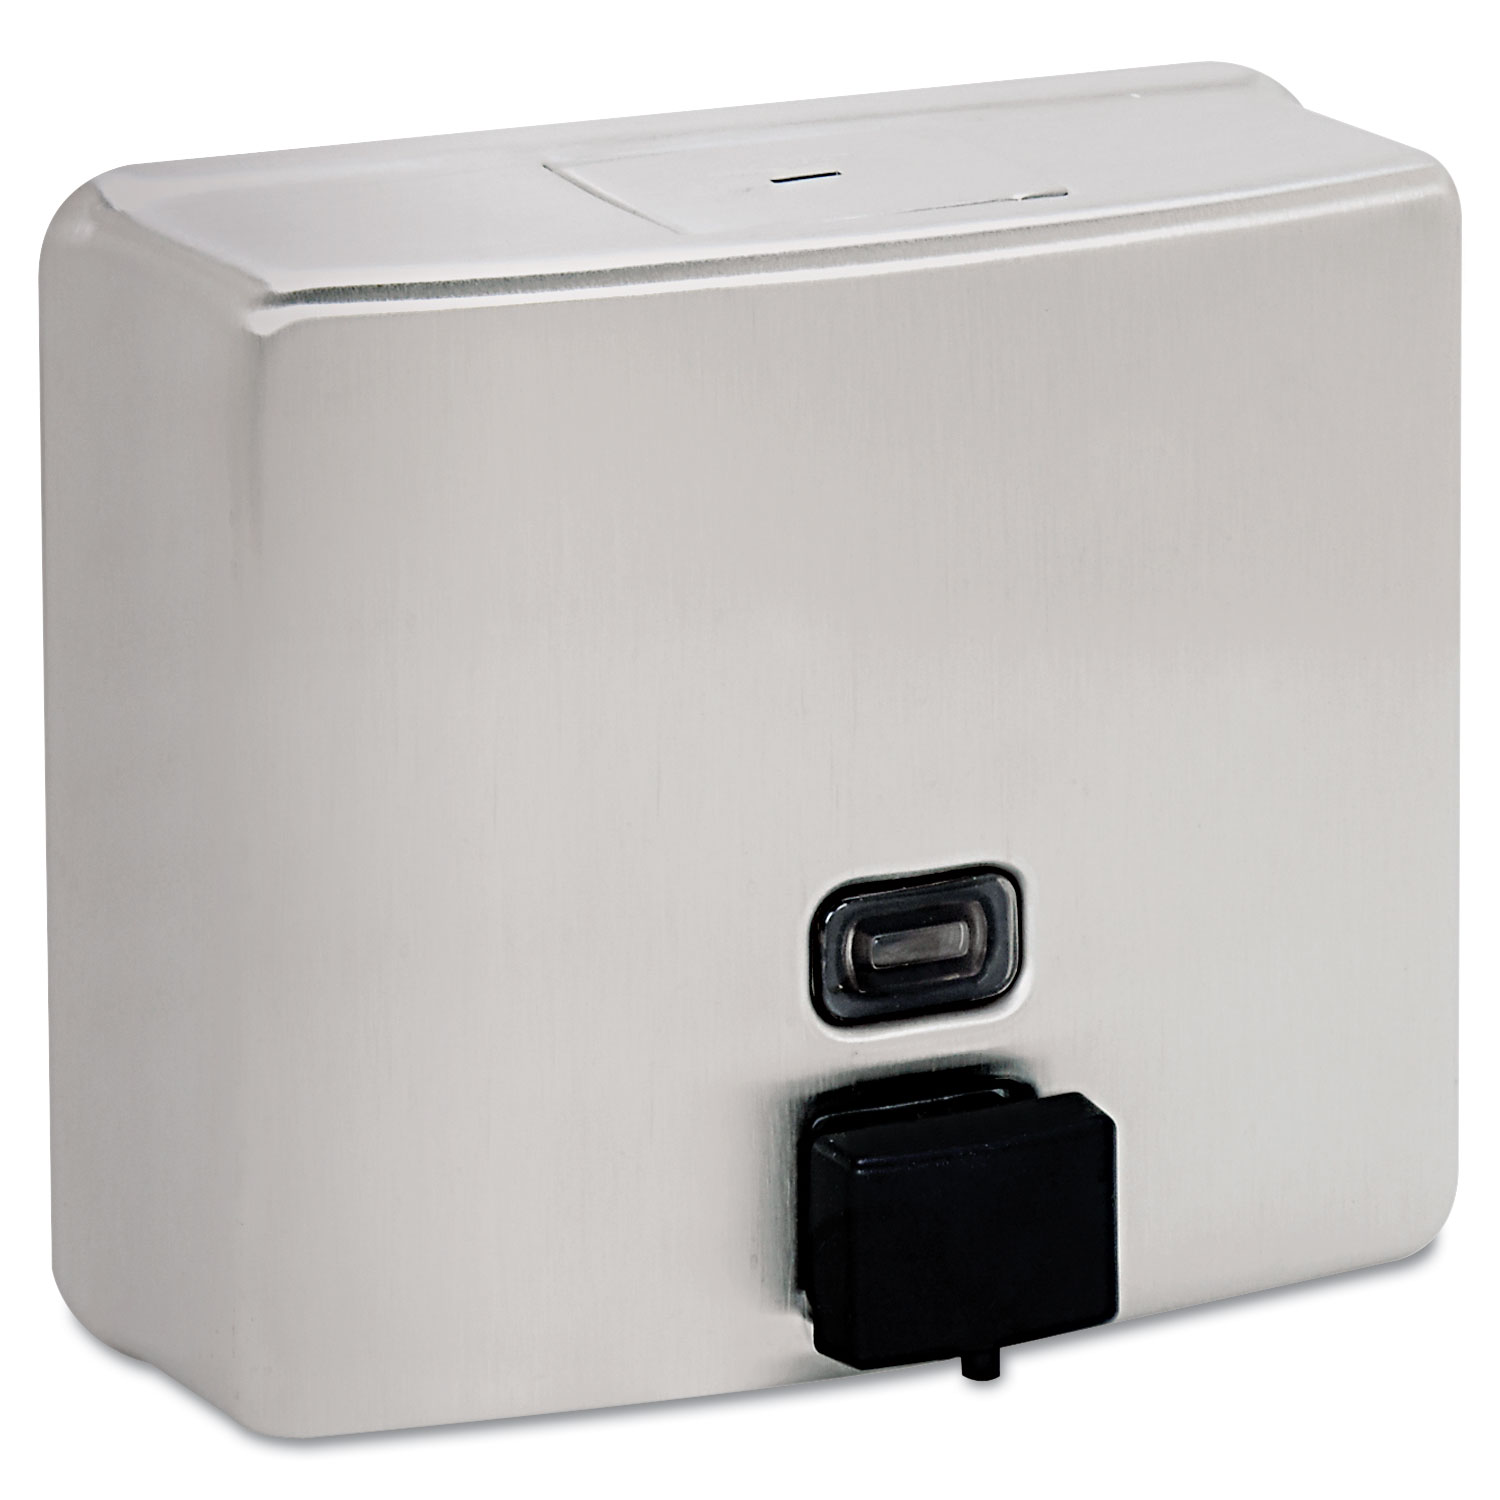  Bobrick 4112 ConturaSeries Surface-Mounted Liquid Soap Dispenser, 40 oz, 7 x 3.31 x 6.13, Stainless Steel Satin (BOB4112) 